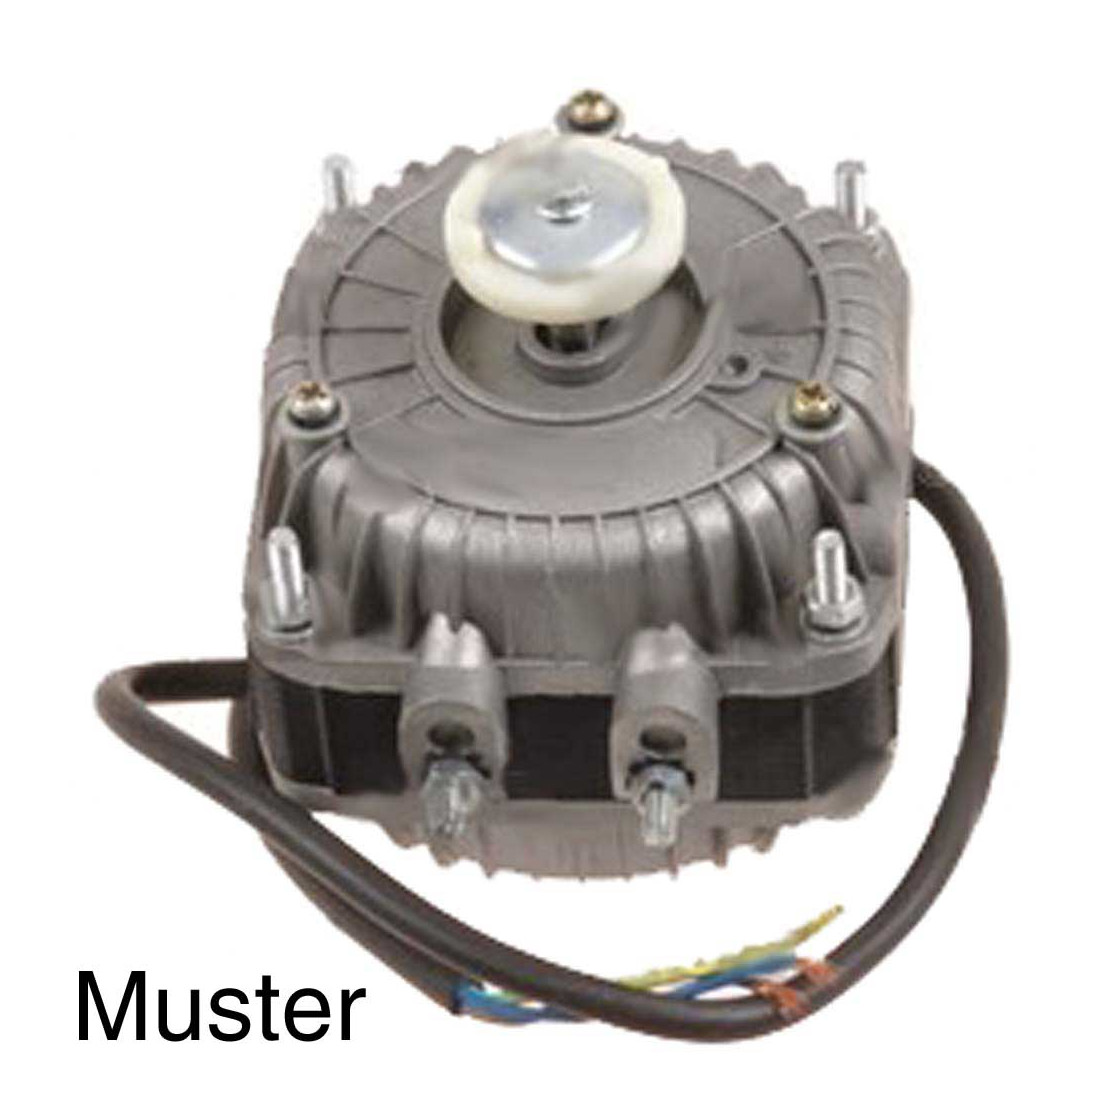 Motor EBM M4Q045-CA03-75 Kapazität/Leistung 10/36 W, 50 Hz 230 V /1 